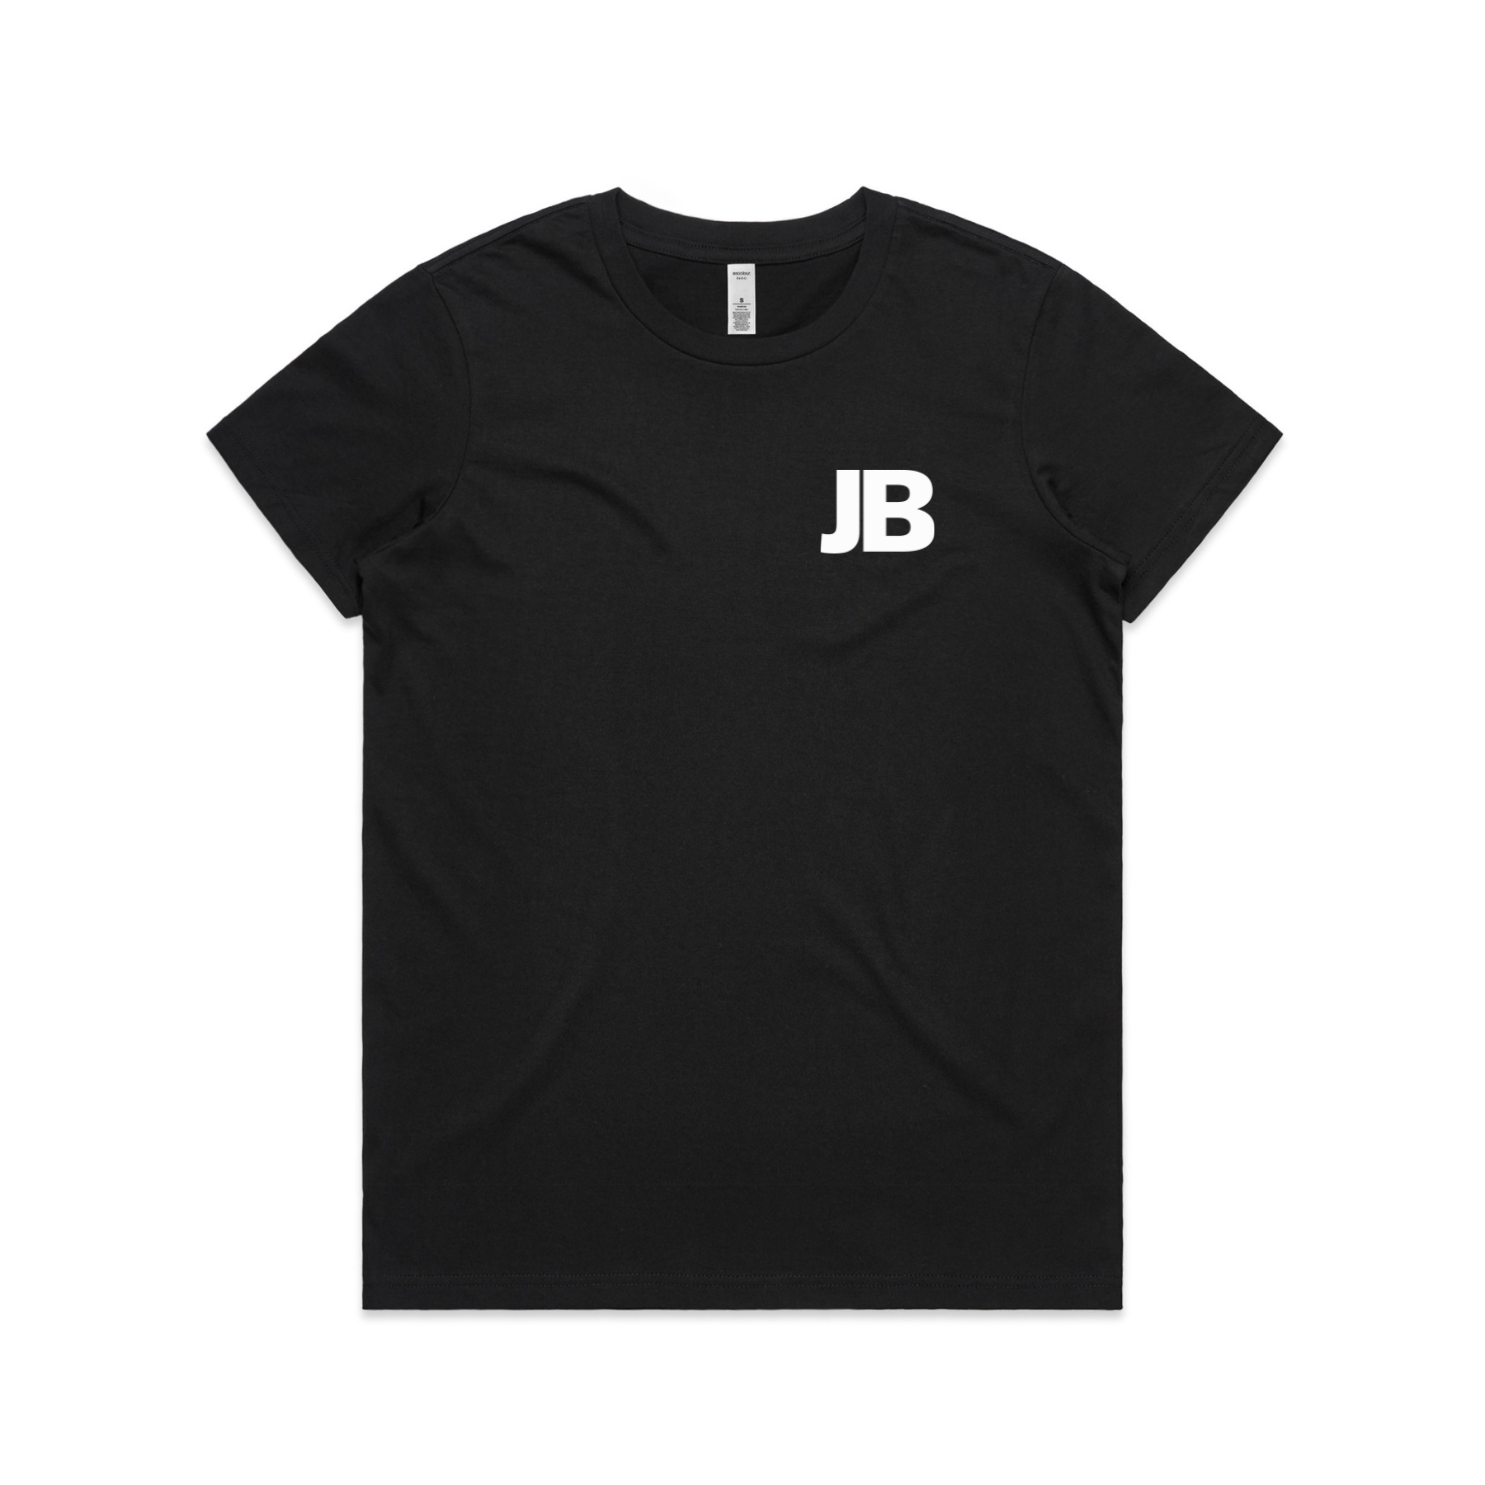 Little Darling | Jimmy Barnes | Womens T shirt